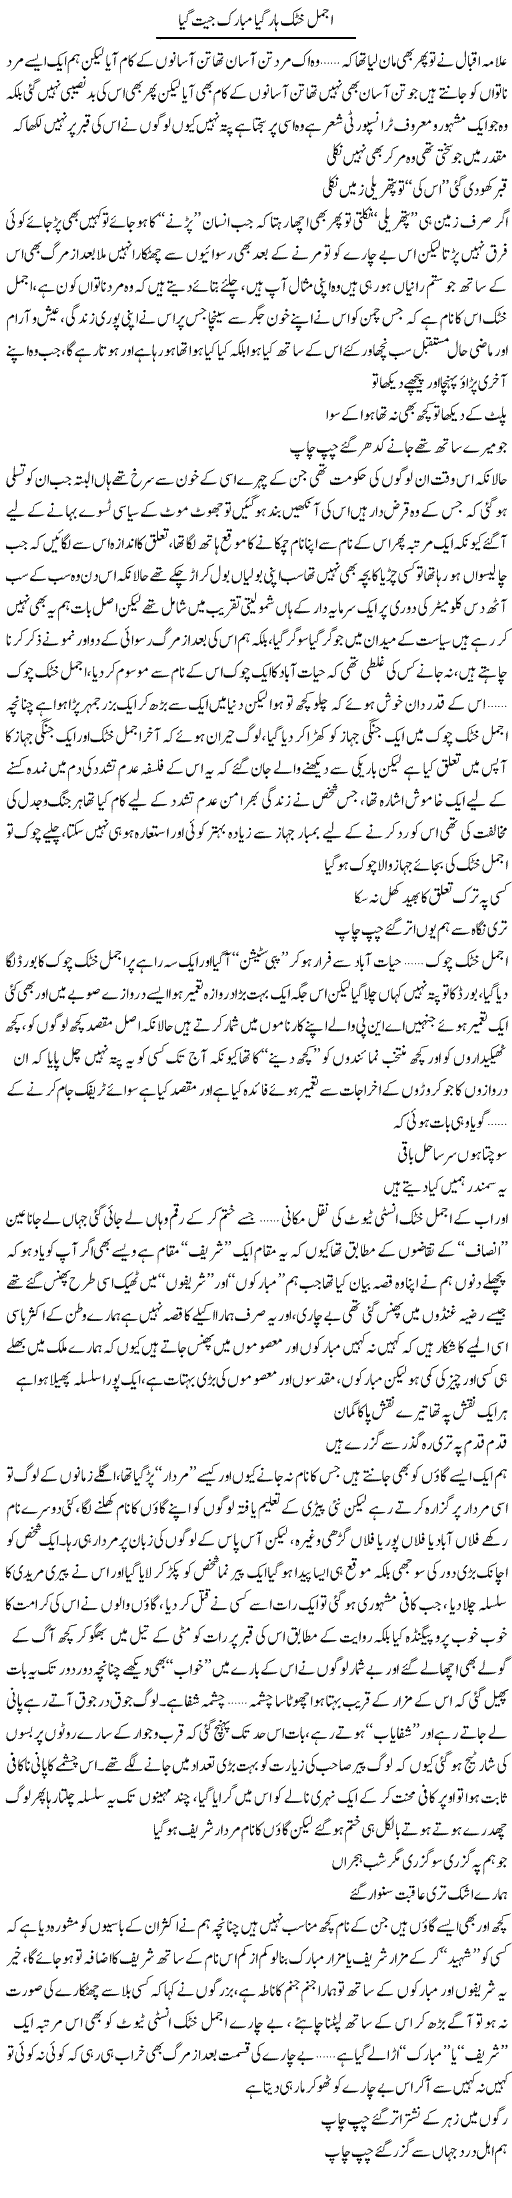 Ajmal khattak haar gaya mubarak jeet gaya | Saad Ullah Jan Barq | Daily Urdu Columns